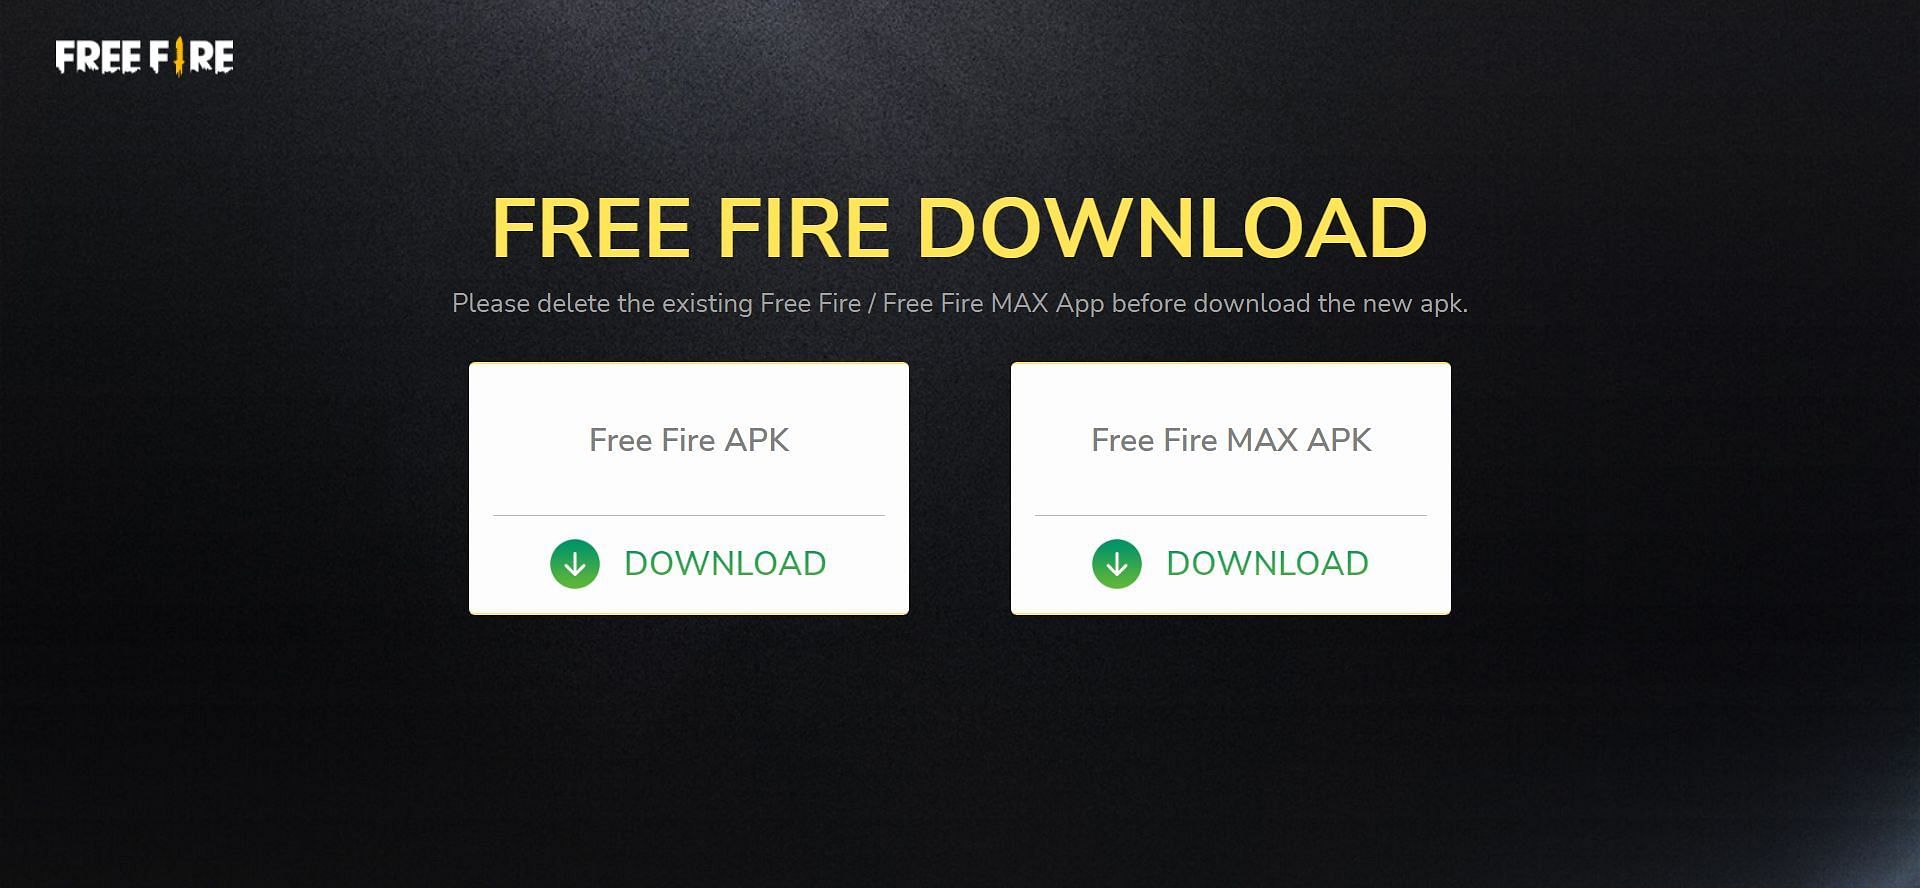 Download size for both APK files (Image via Garena)